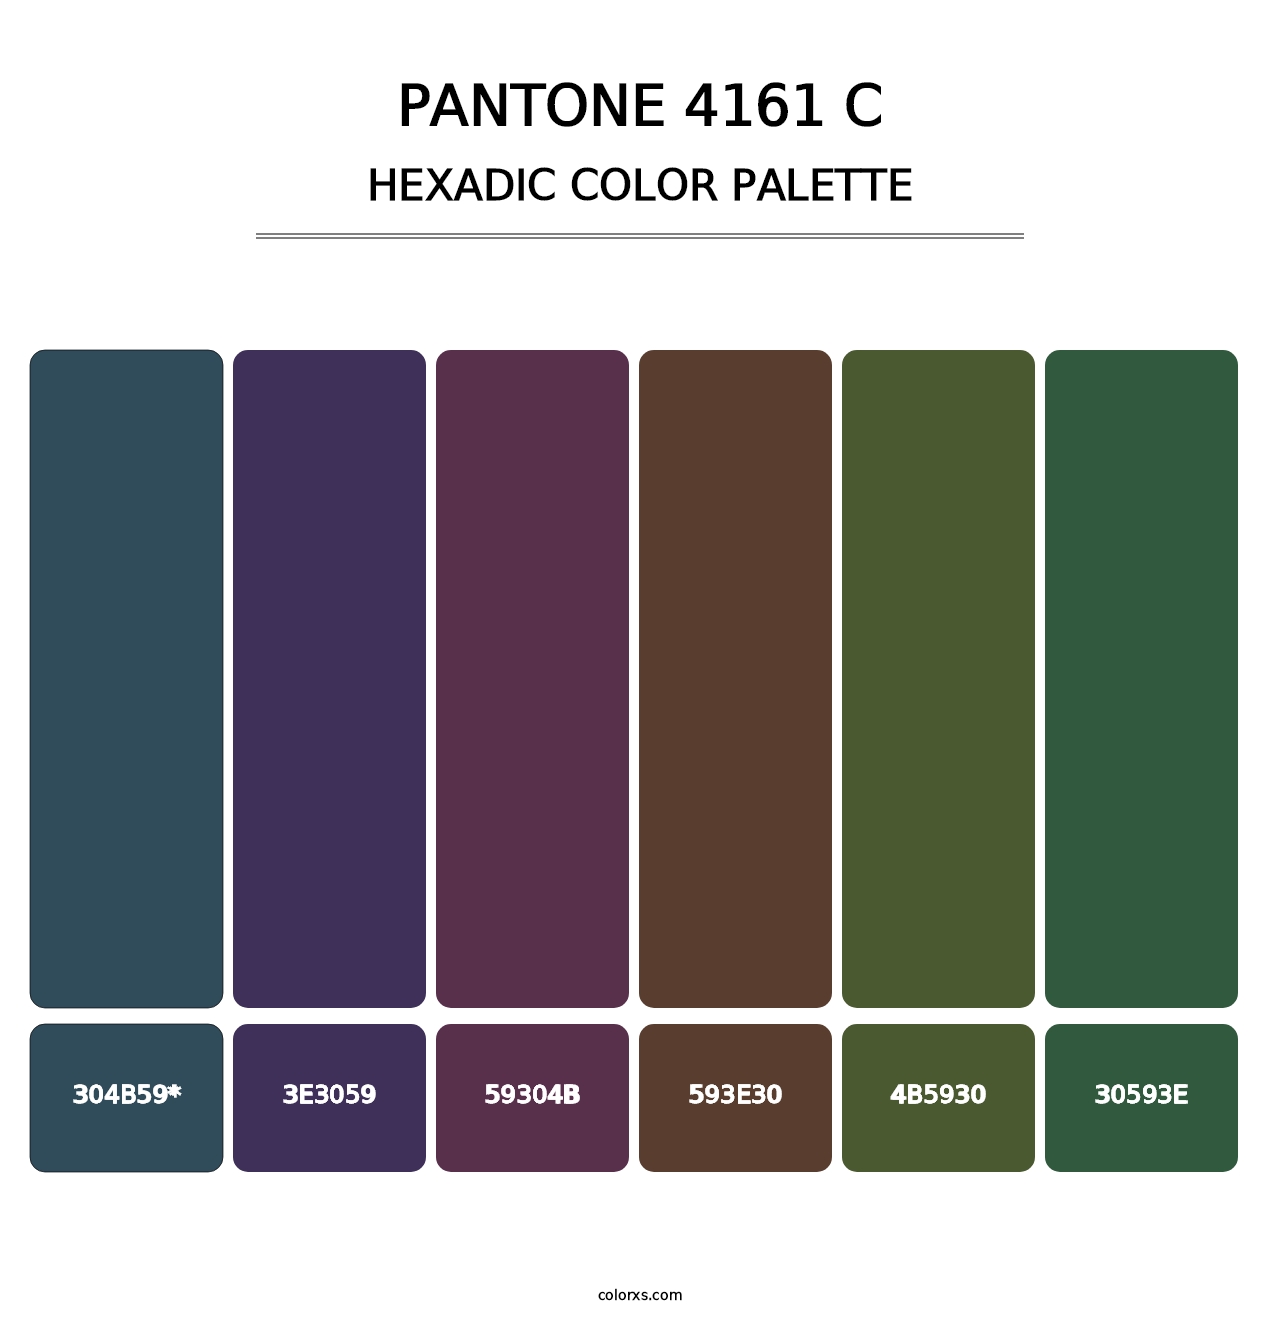 PANTONE 4161 C - Hexadic Color Palette